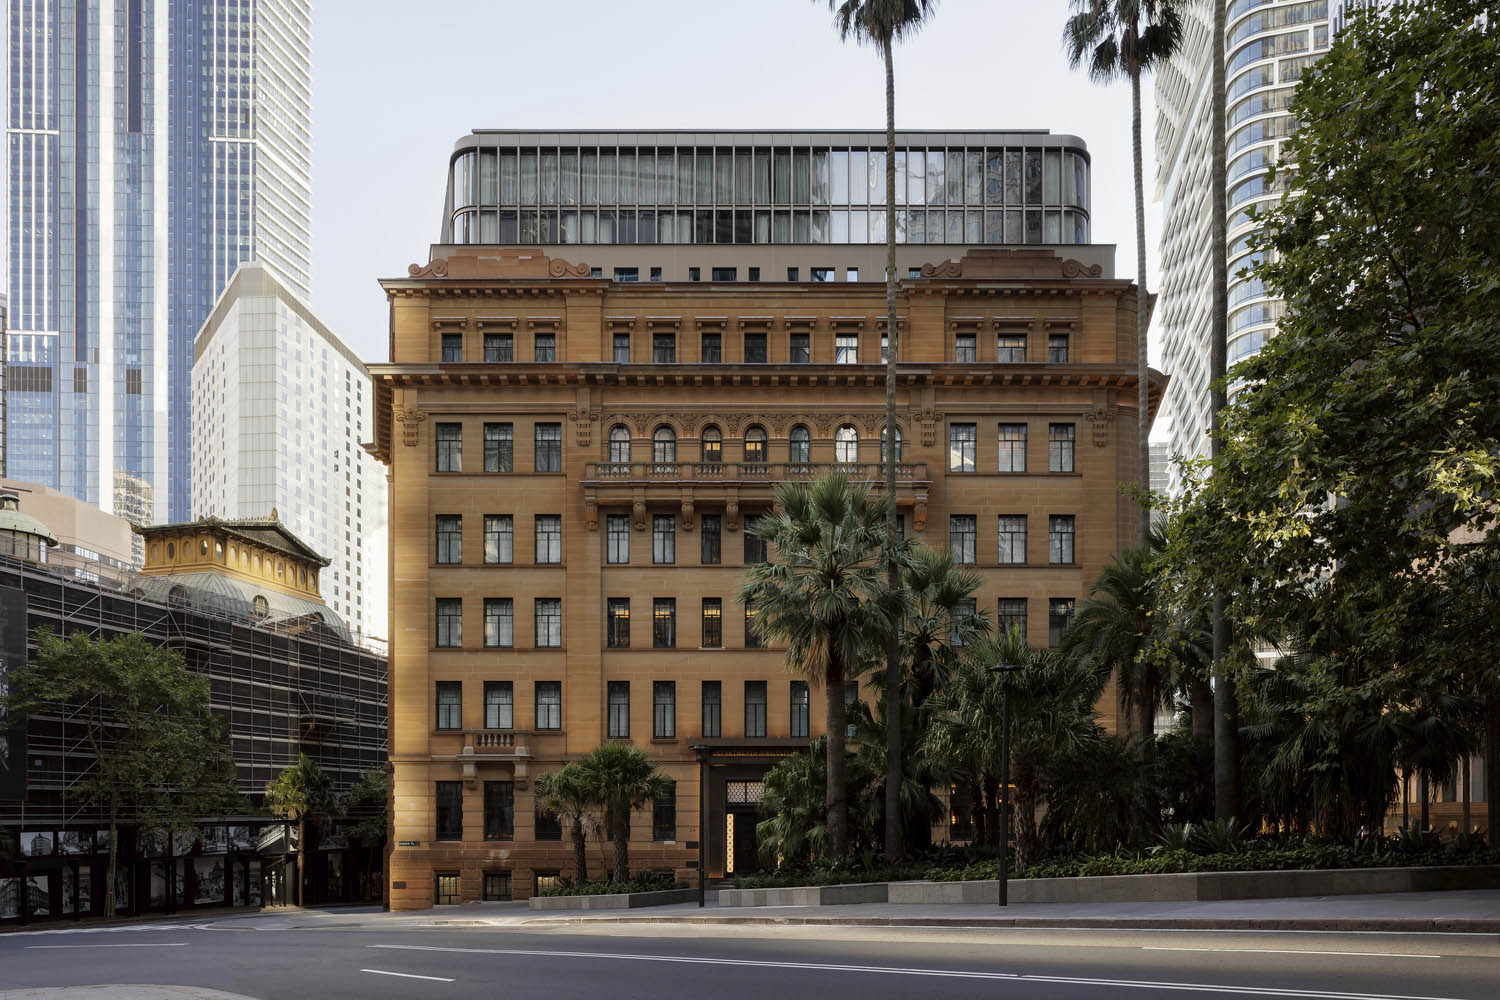 Make Architects,悉尼,Capella Sydney Hotel,BAR Studio,嘉佩樂度假酒店,度假酒店設計,酒店設計案例,國外酒店設計,嘉佩樂Capella